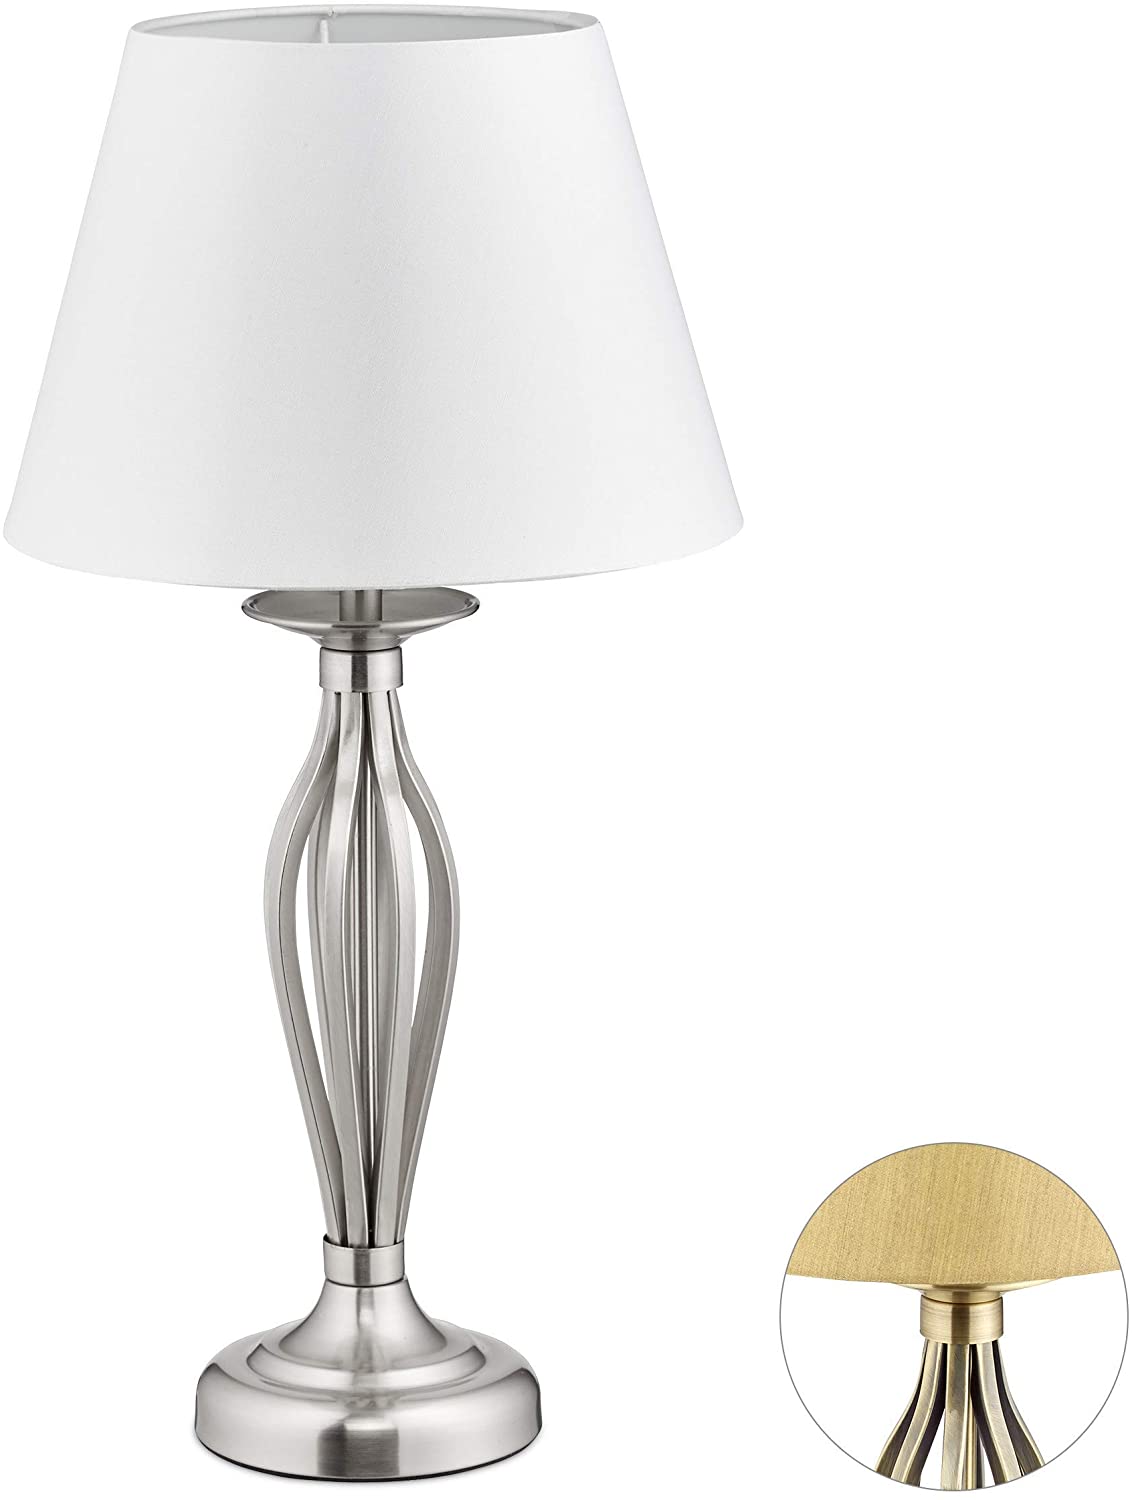 Relaxdays Gold Umbrella Lamp Decorative Floor Lamp With Switch